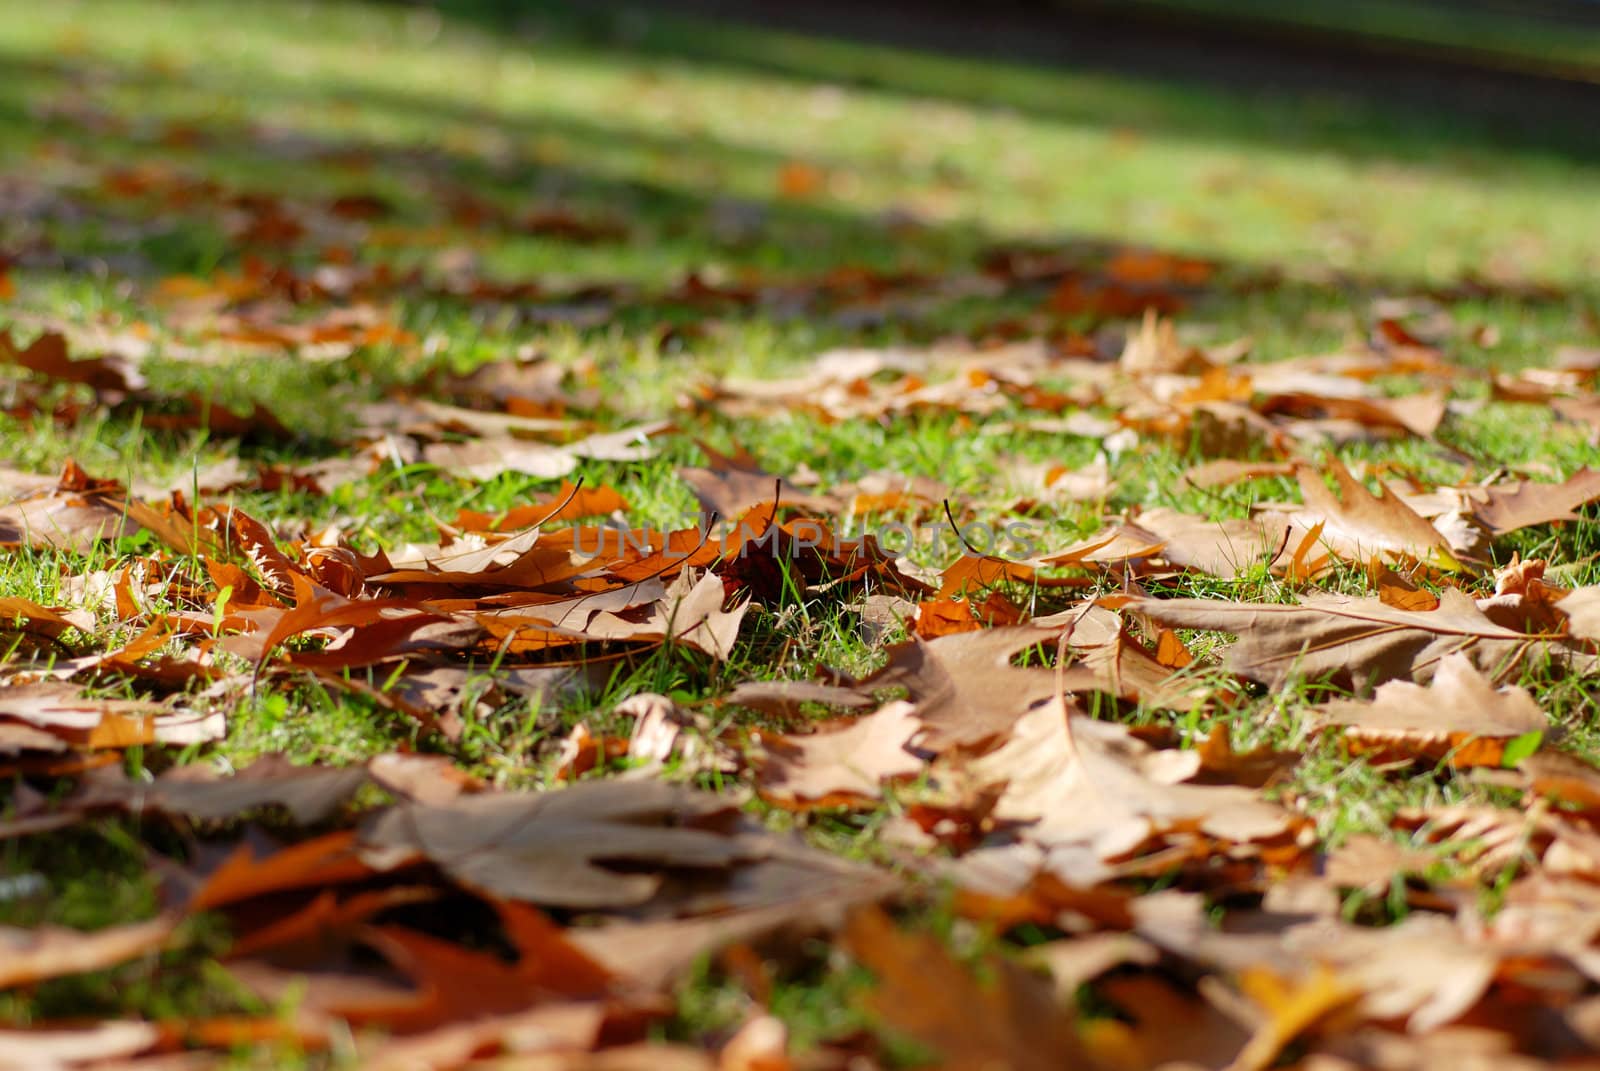 Leaves of oak scattered on the grass. Autumn season. by wojciechkozlowski